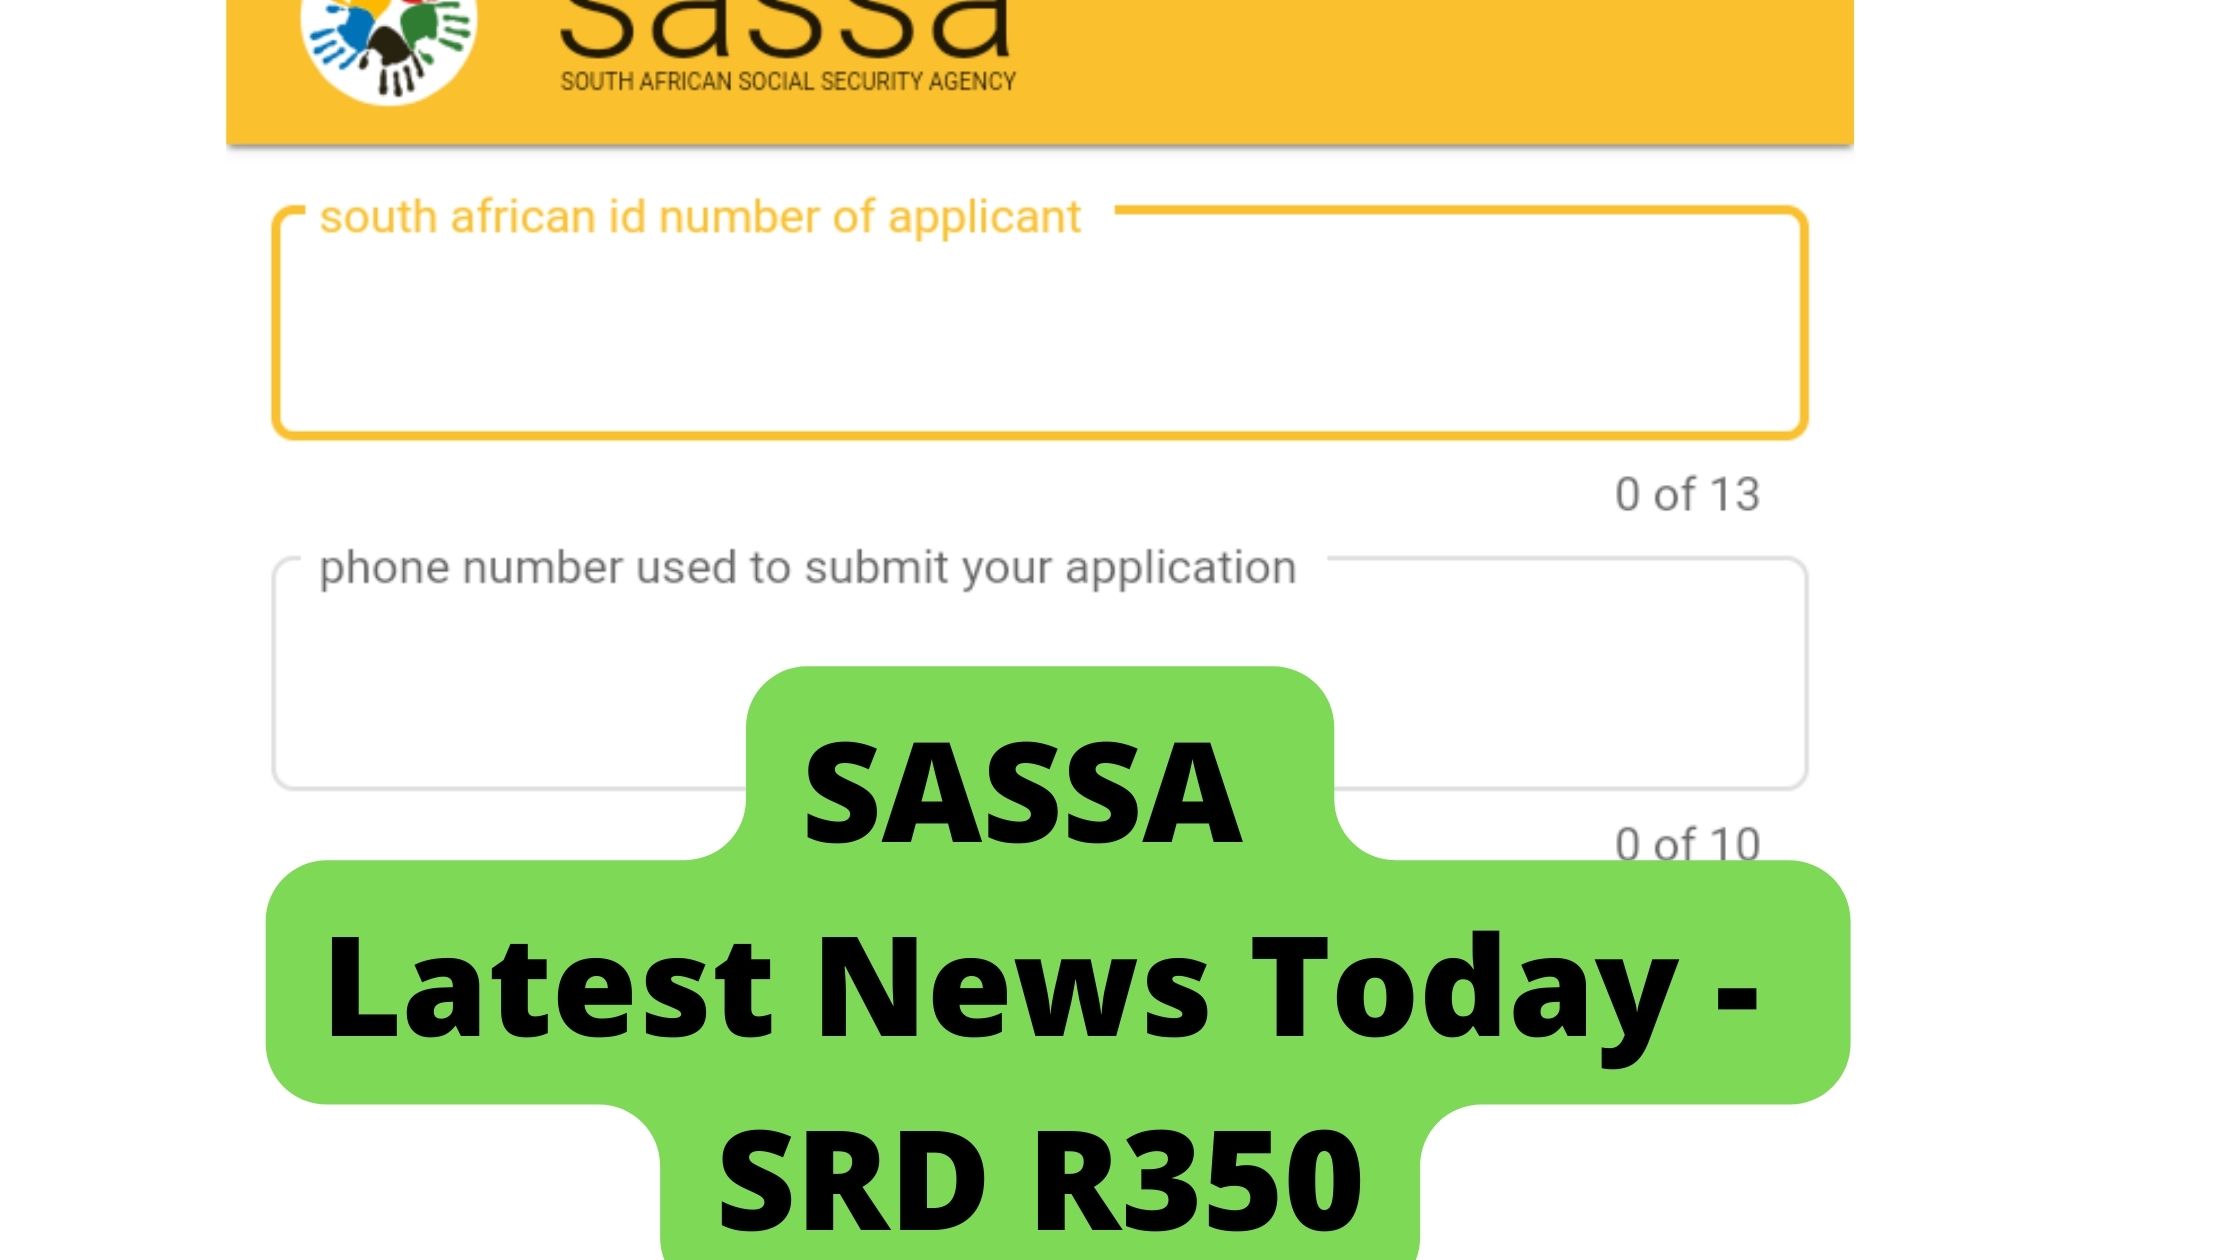 SASSA Latest News Today - SRD R350